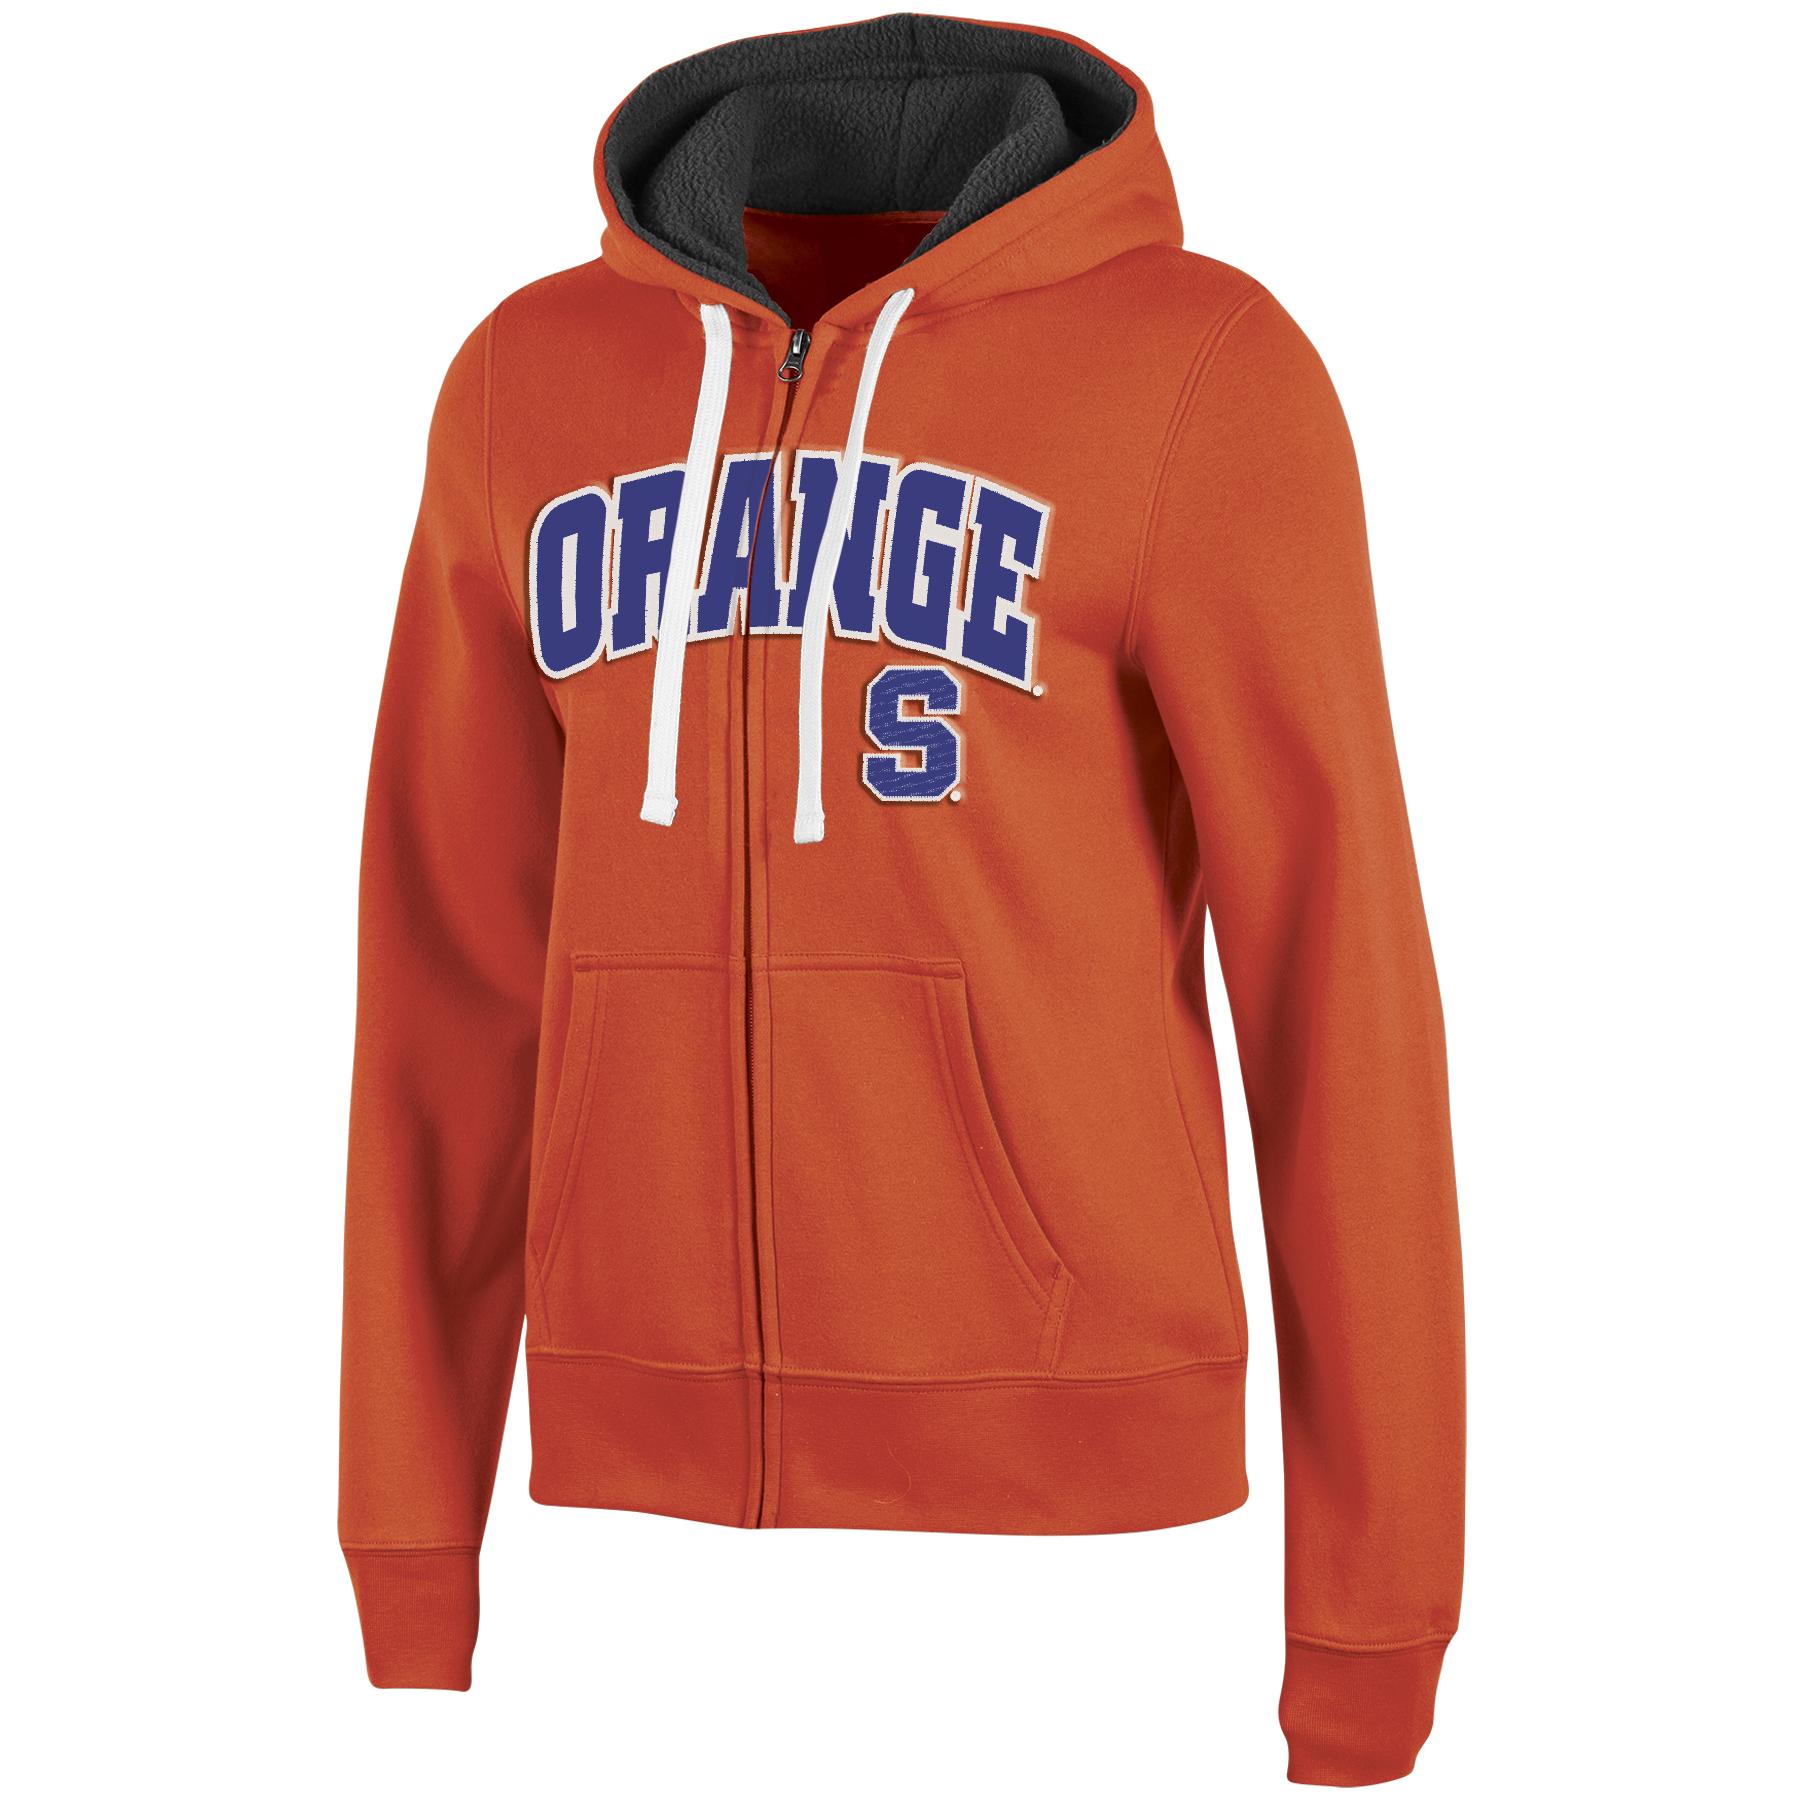 NCAA Women's Hoodie Jacket - Syracuse University Orange